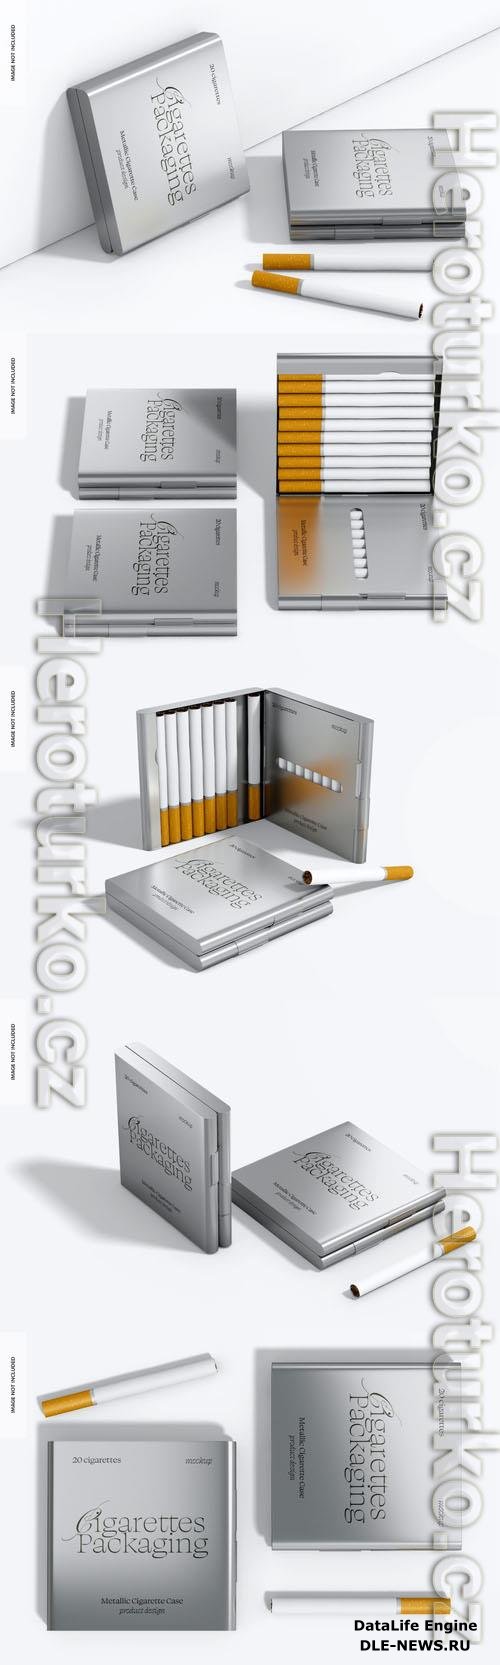 Metallic cigarette case psd template mockup leaned design